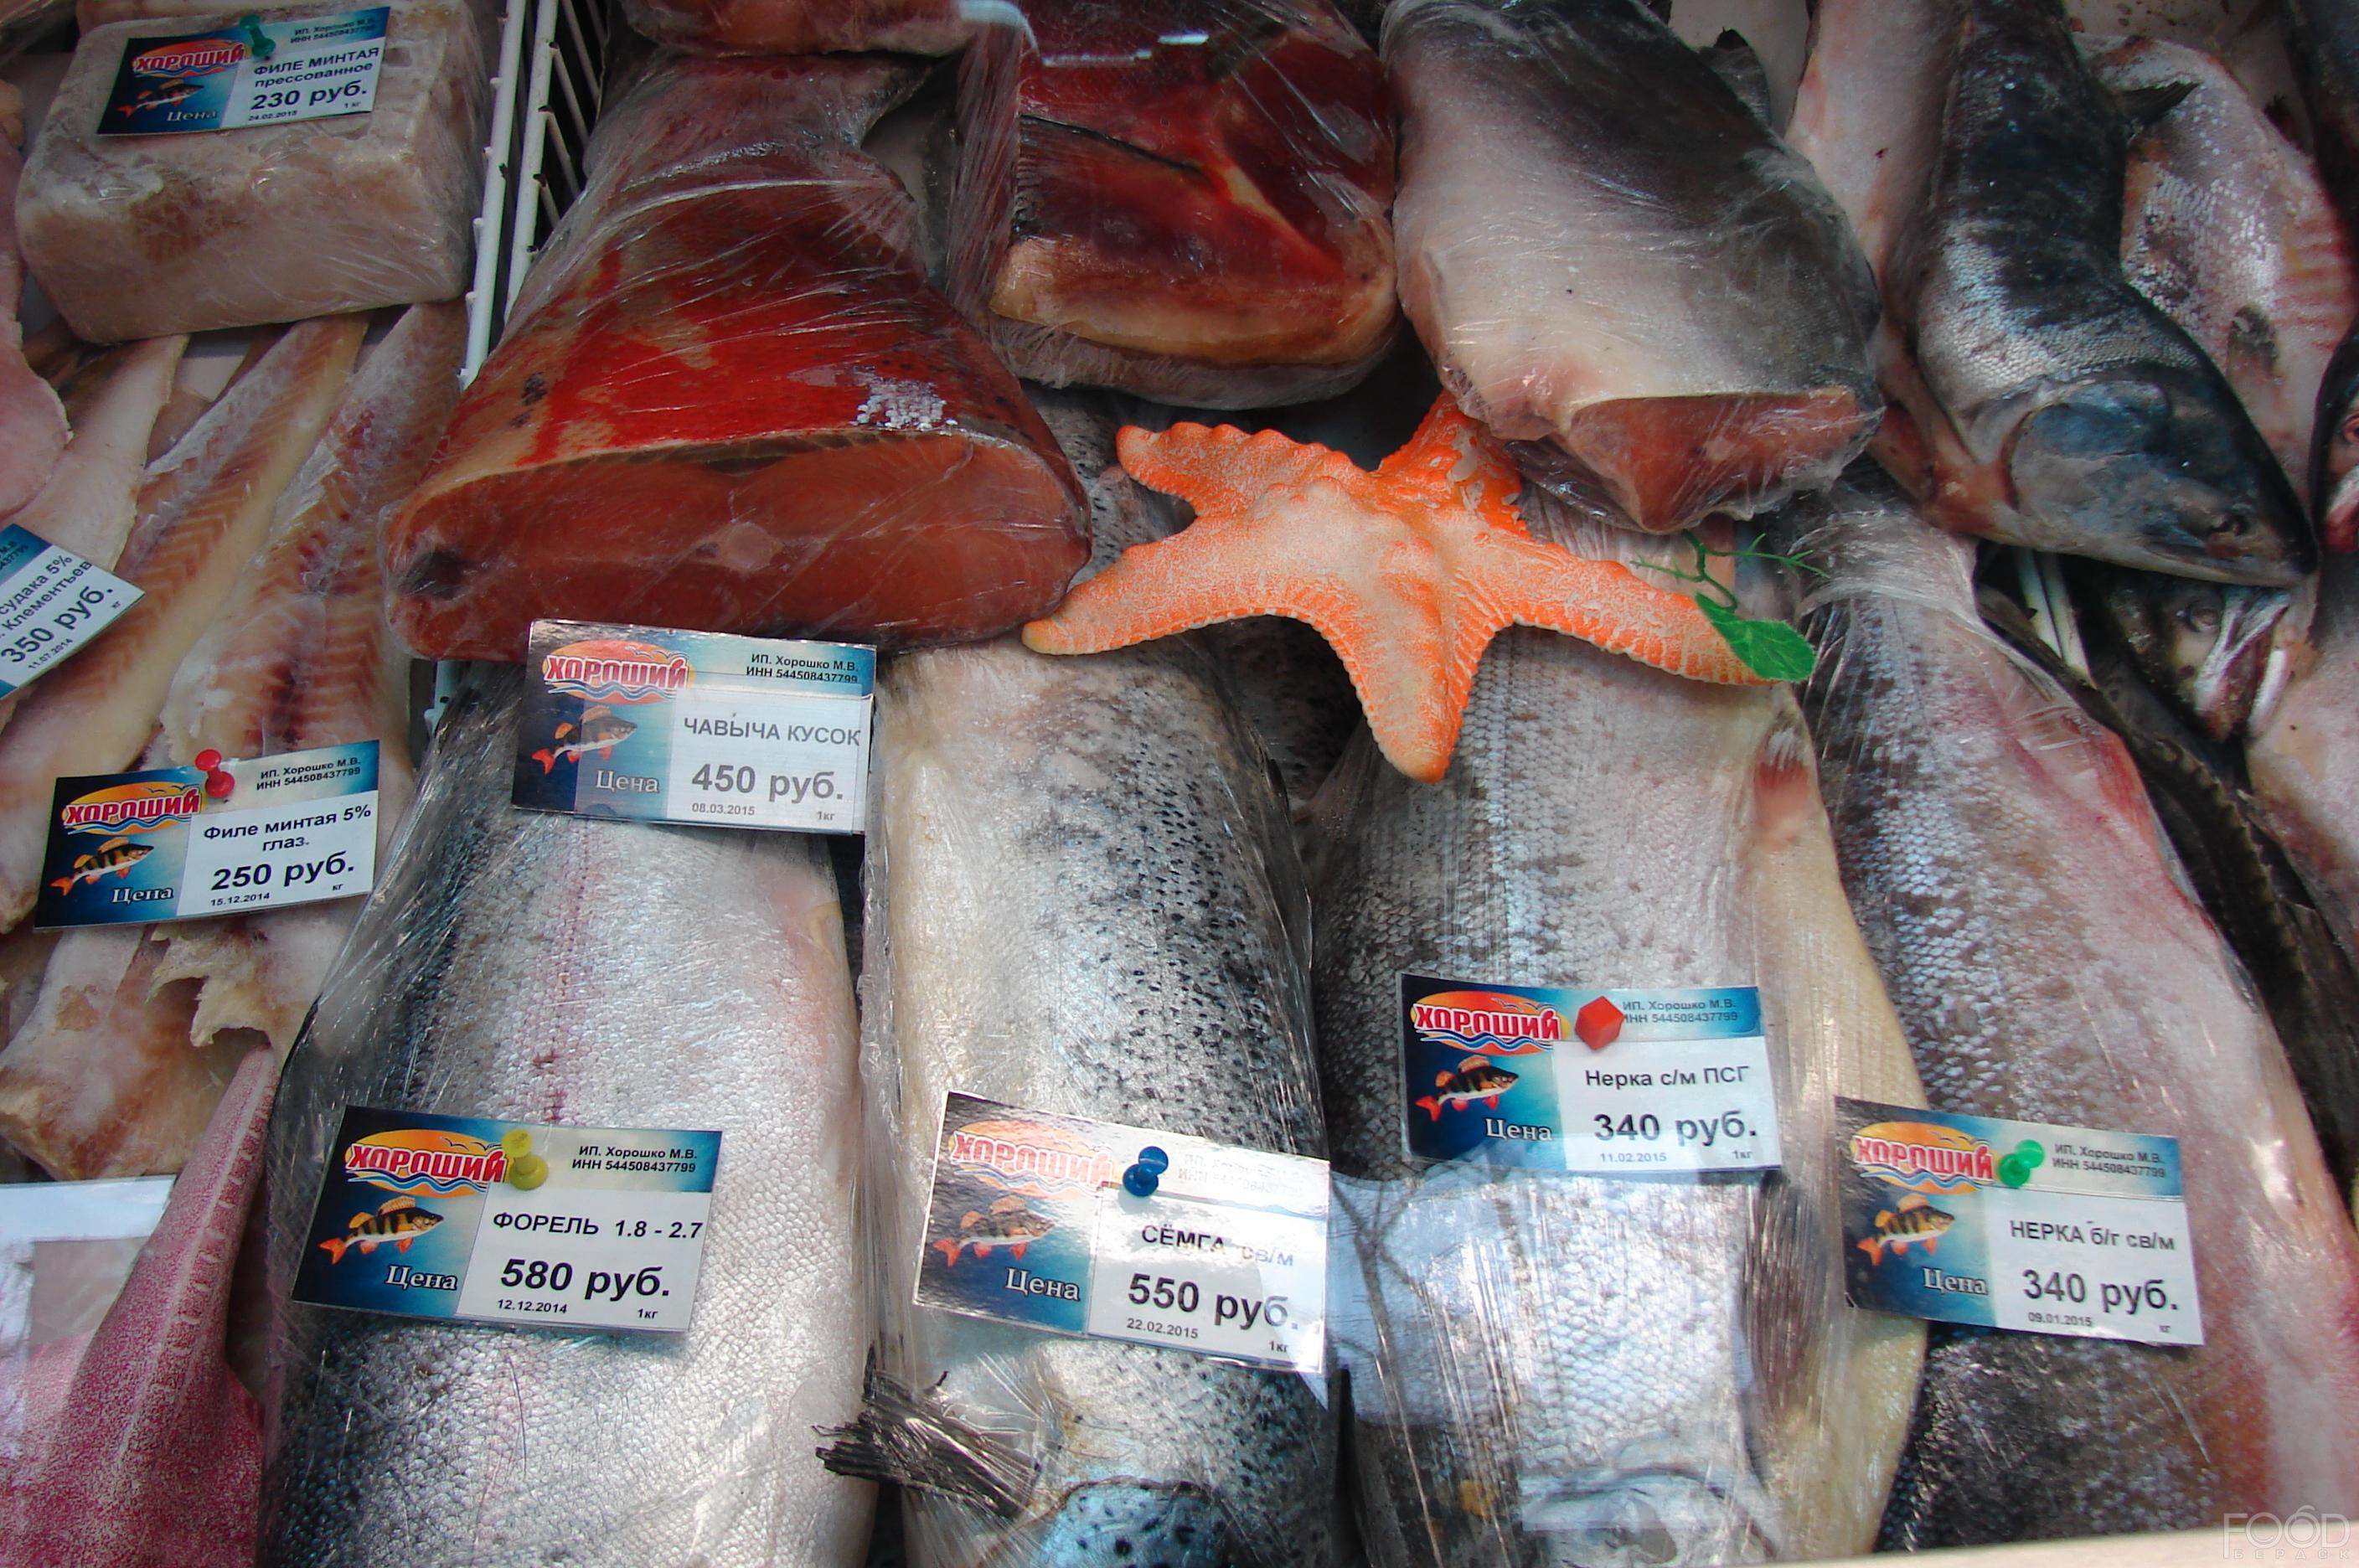 Свежая рыба купить в москве. Самая дешевая рыба в магазине. Красная рыба на рынке. Бухта рынок рыба. Самая дешевая рыба в магазине замороженная.